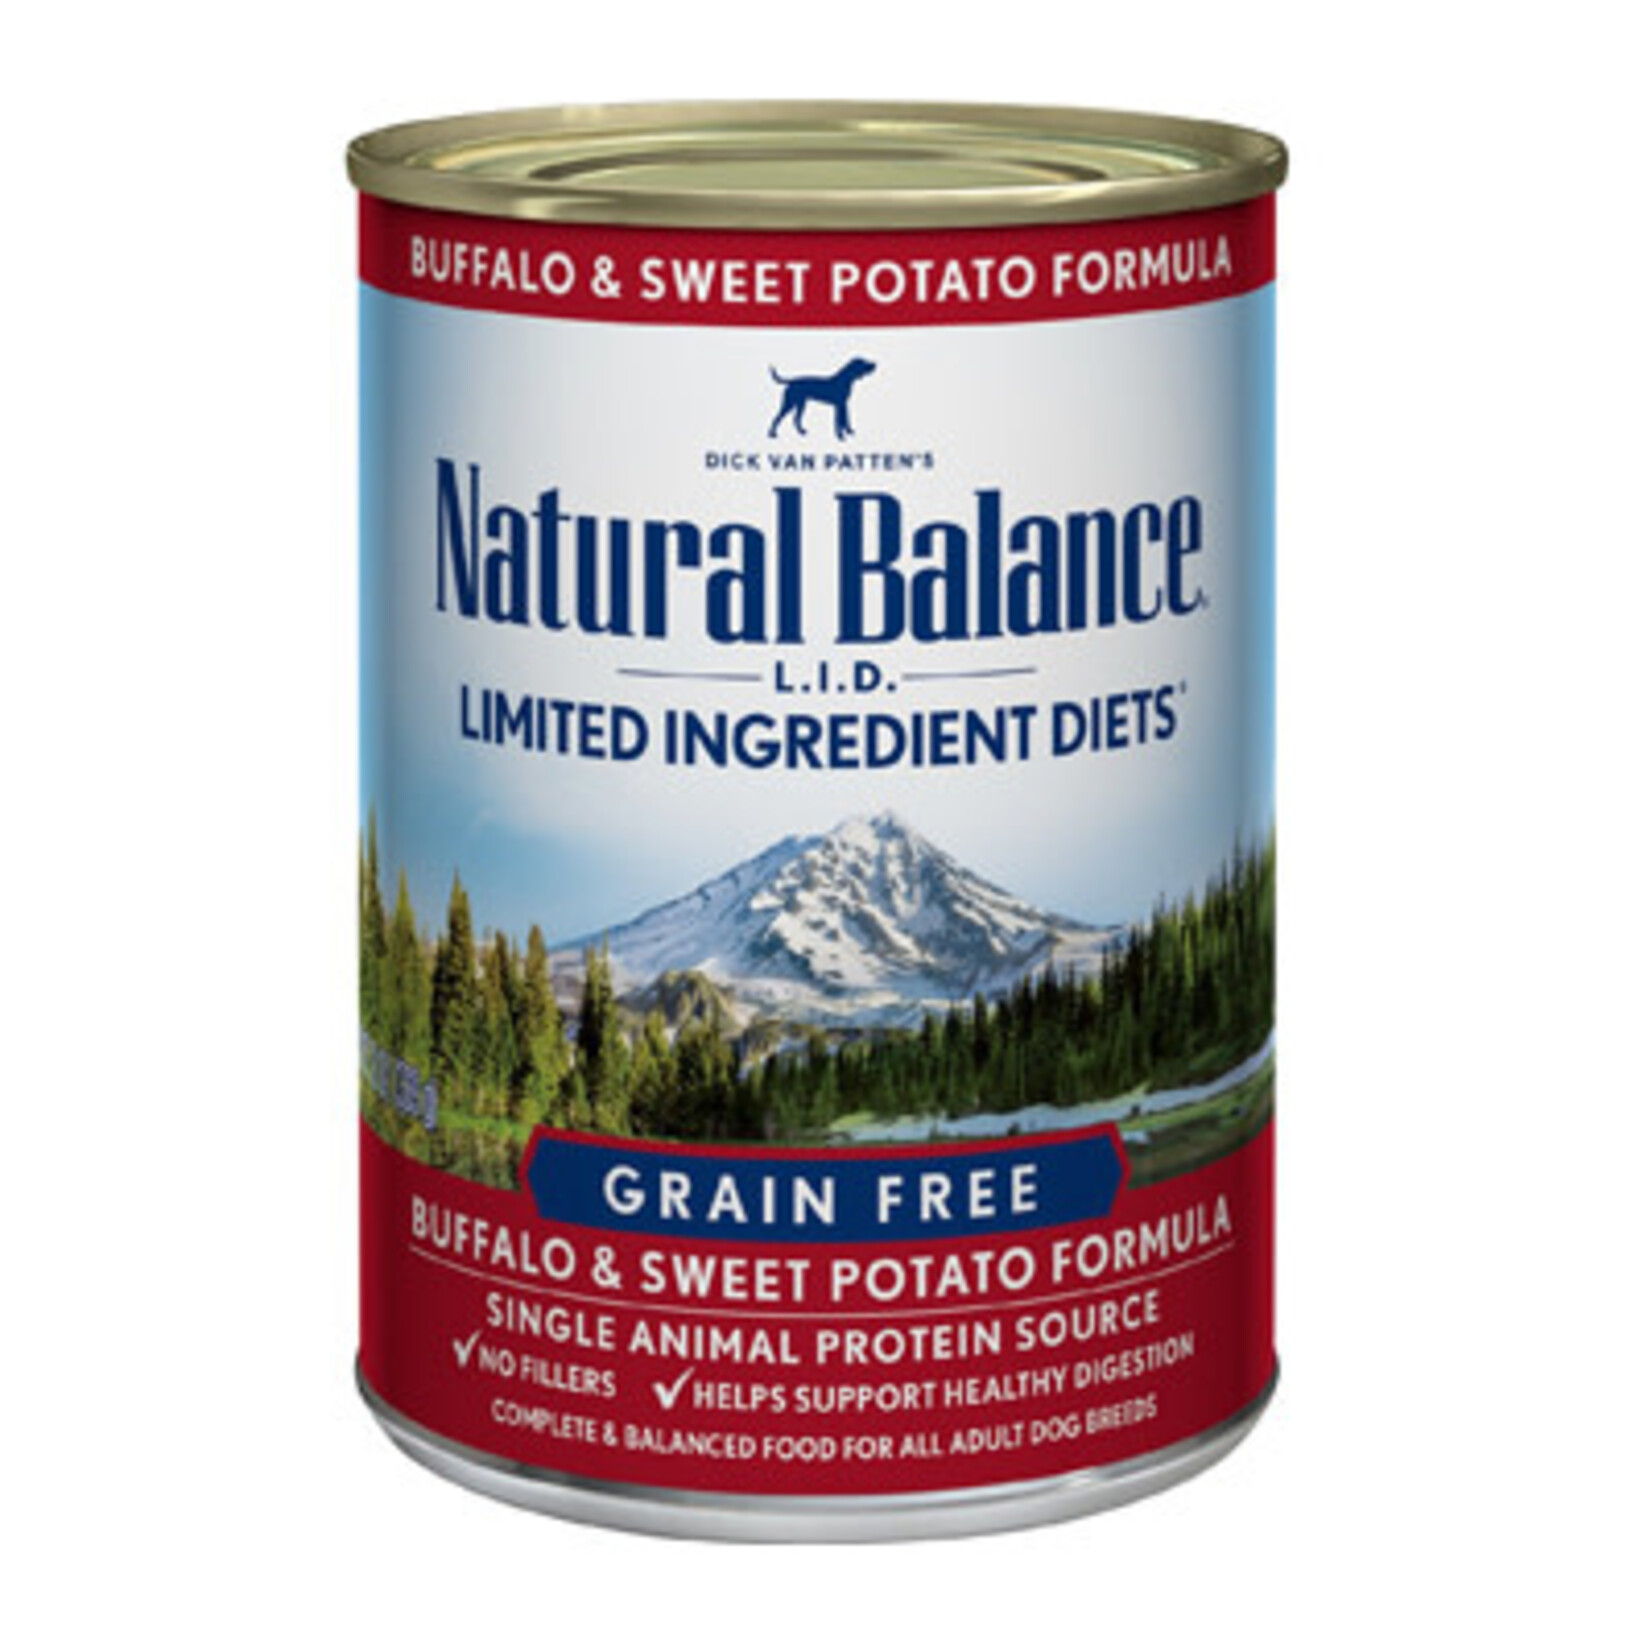 Natural Balance Natural Balance Grain Free 13oz Canned Dog Food